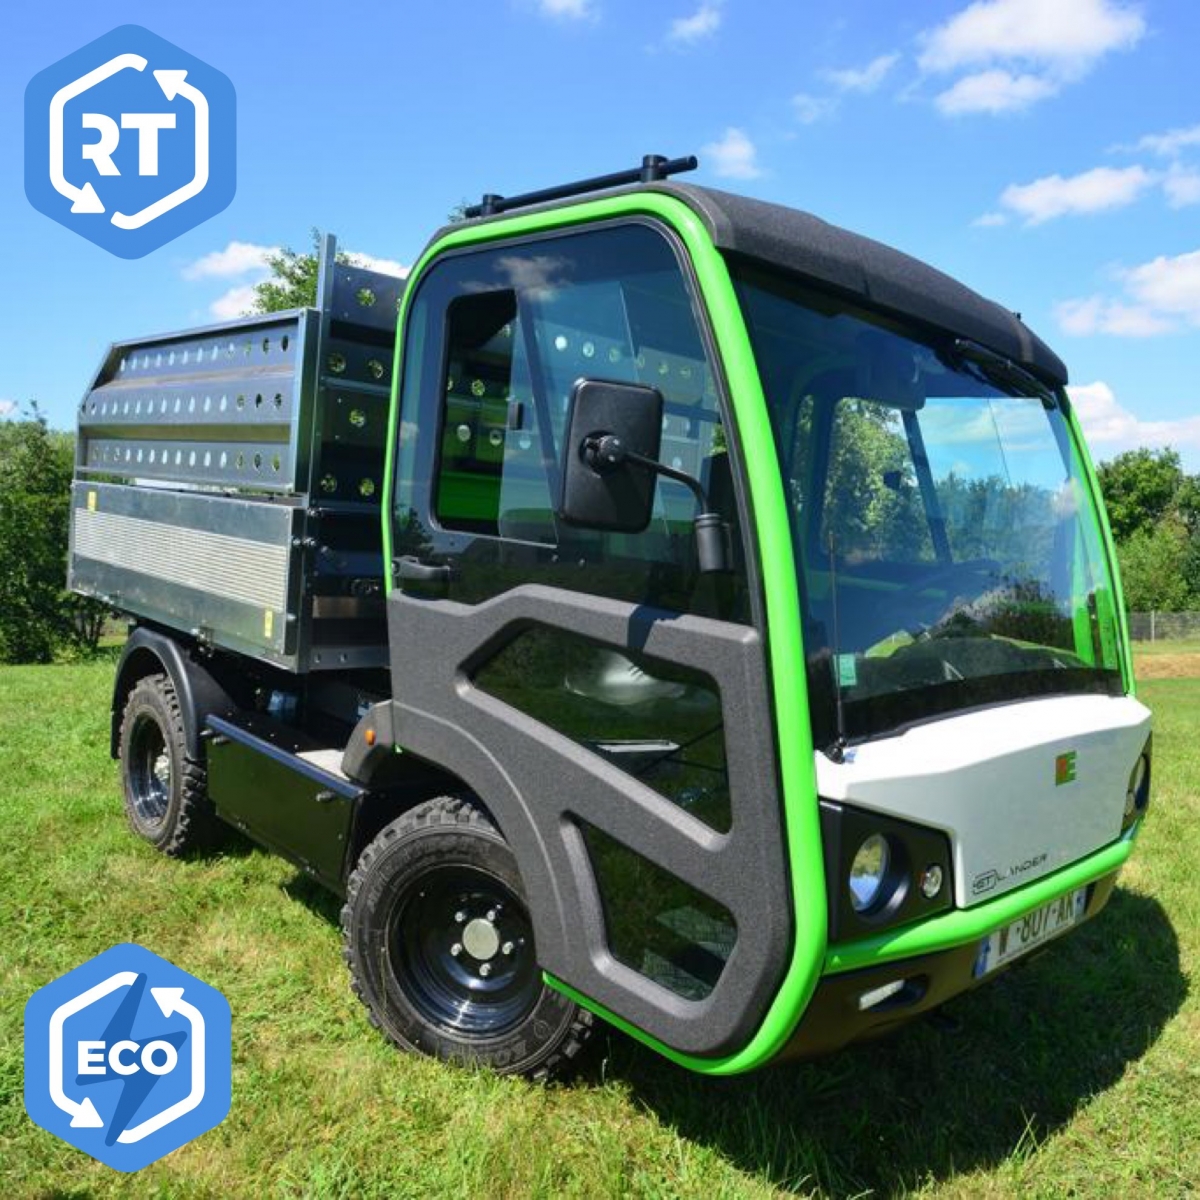 Etesia ET Lander Battery-powered Multi-Purpose Utility Vehicle